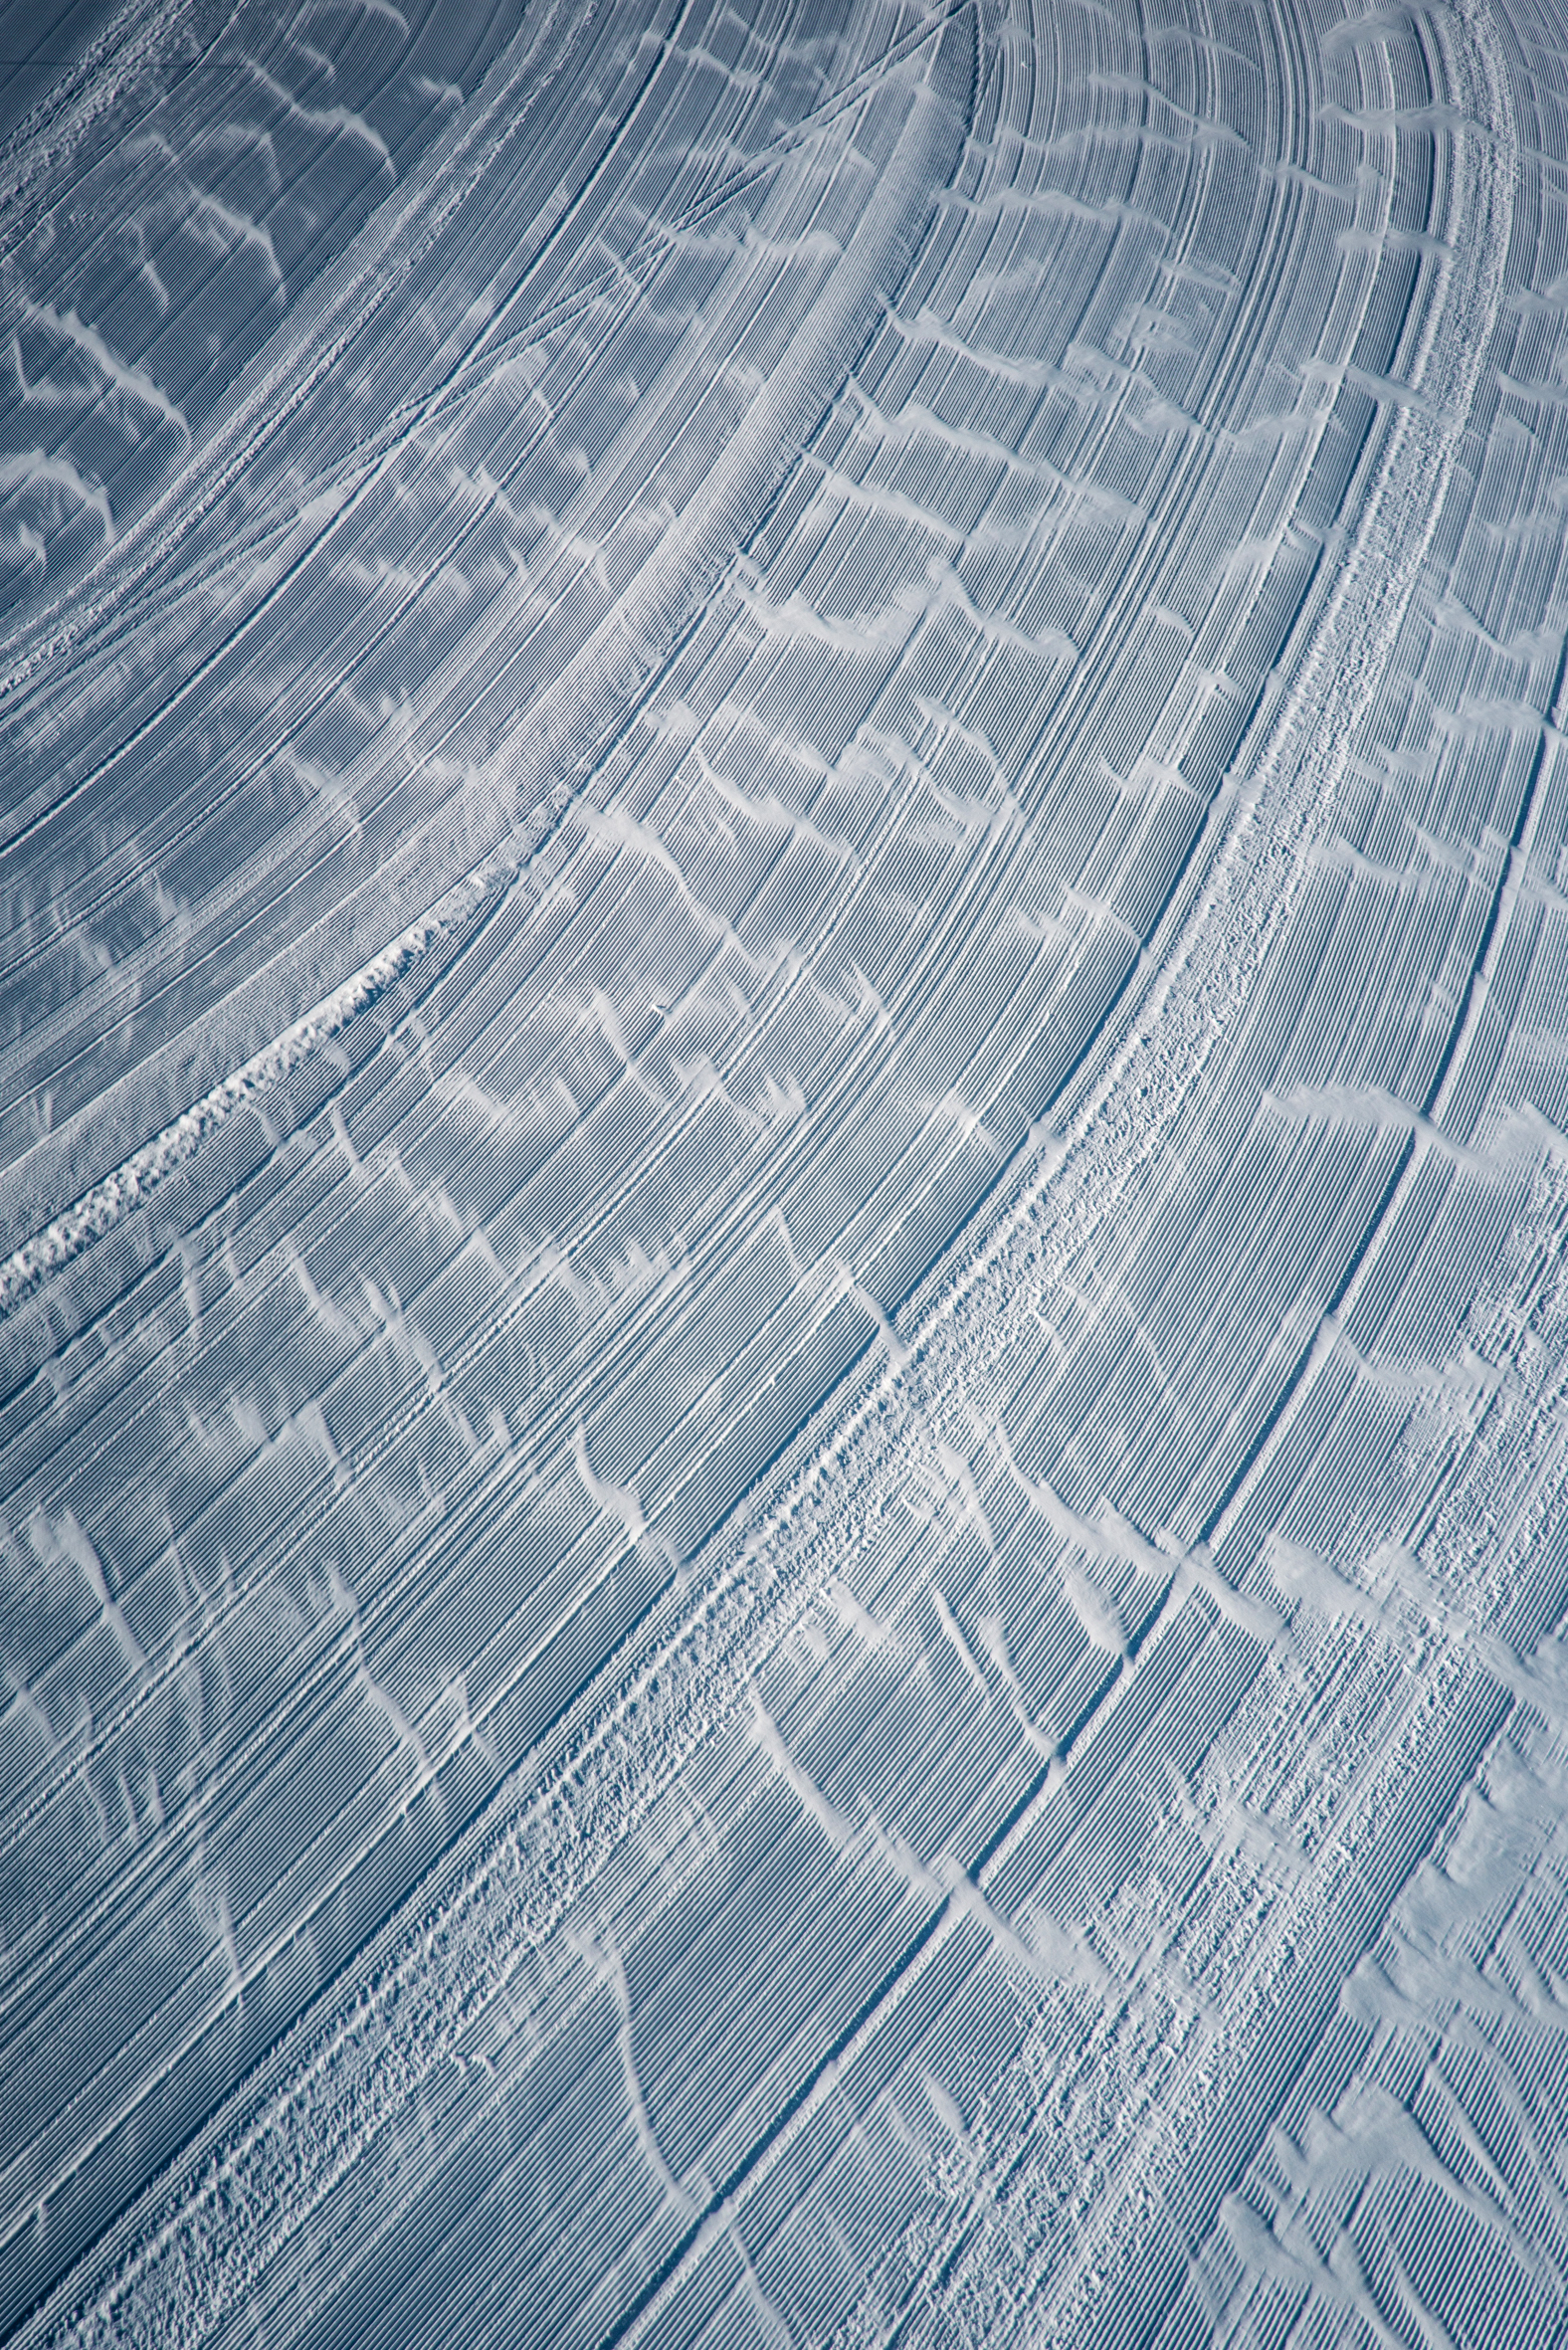 Piste ski montagne neige virage traces QEO